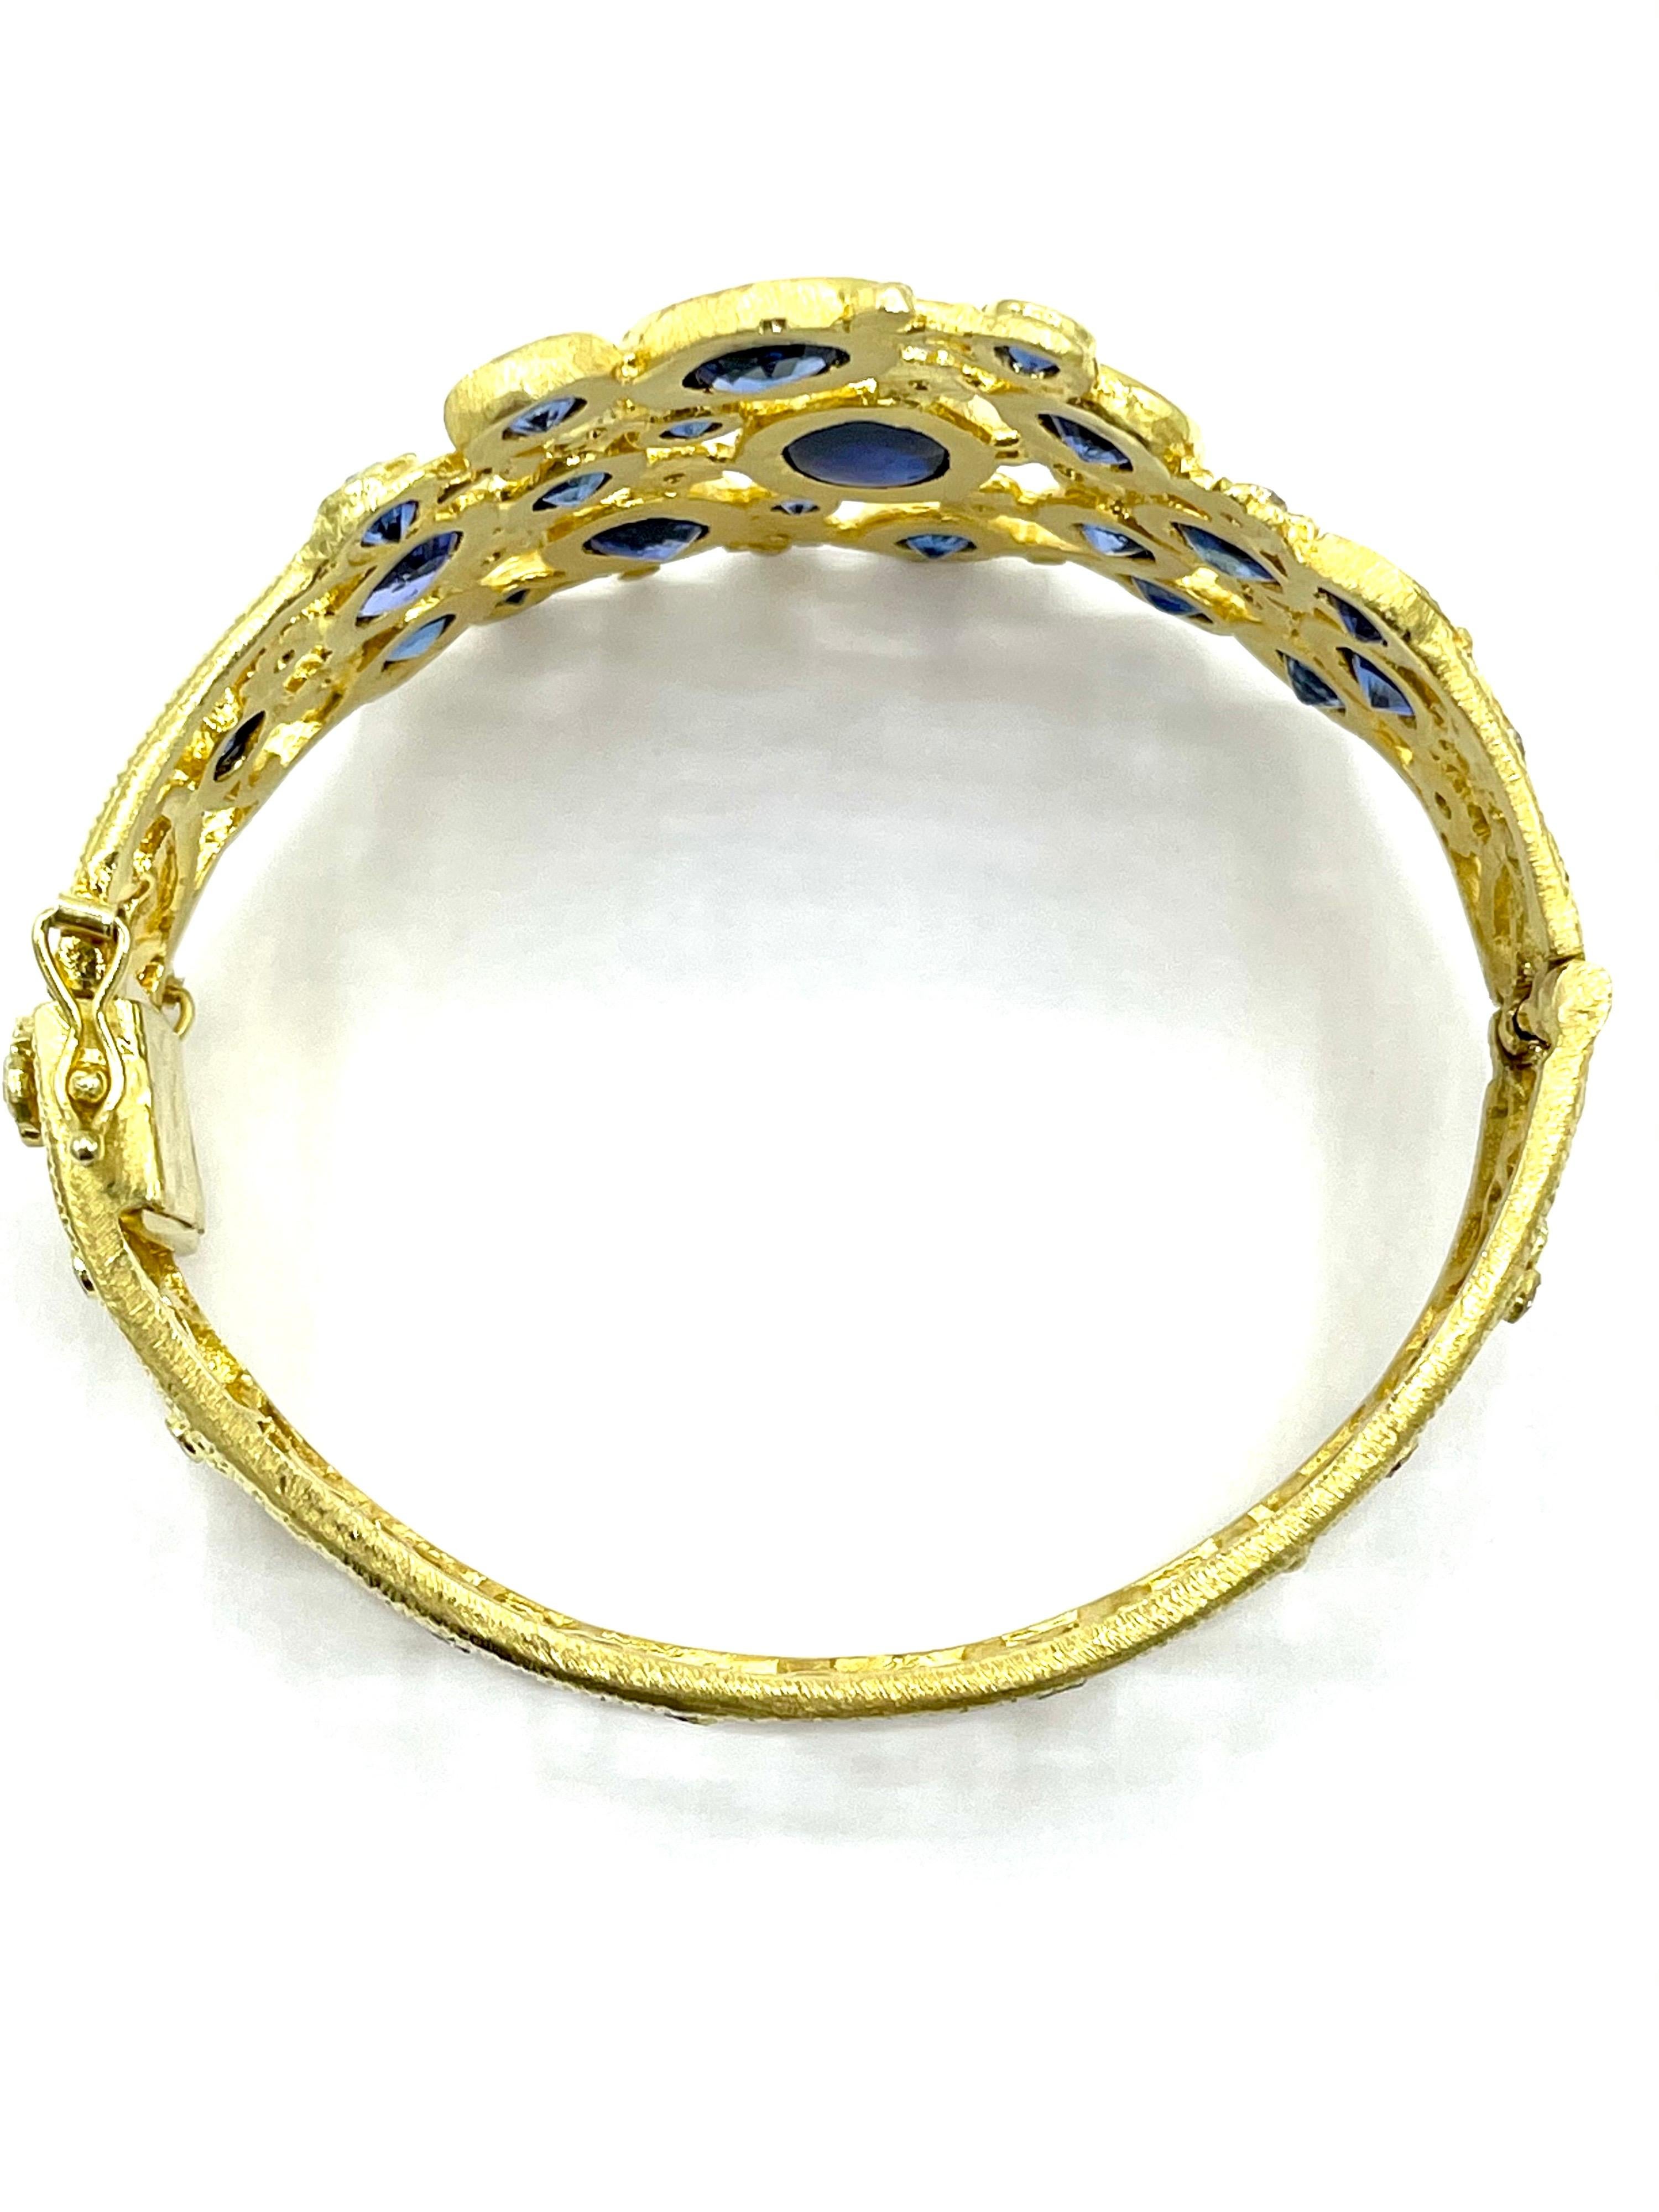 Modern Tanya Farah 29.70 Carat Sapphire and Diamond Floral Yellow Gold Bracelet